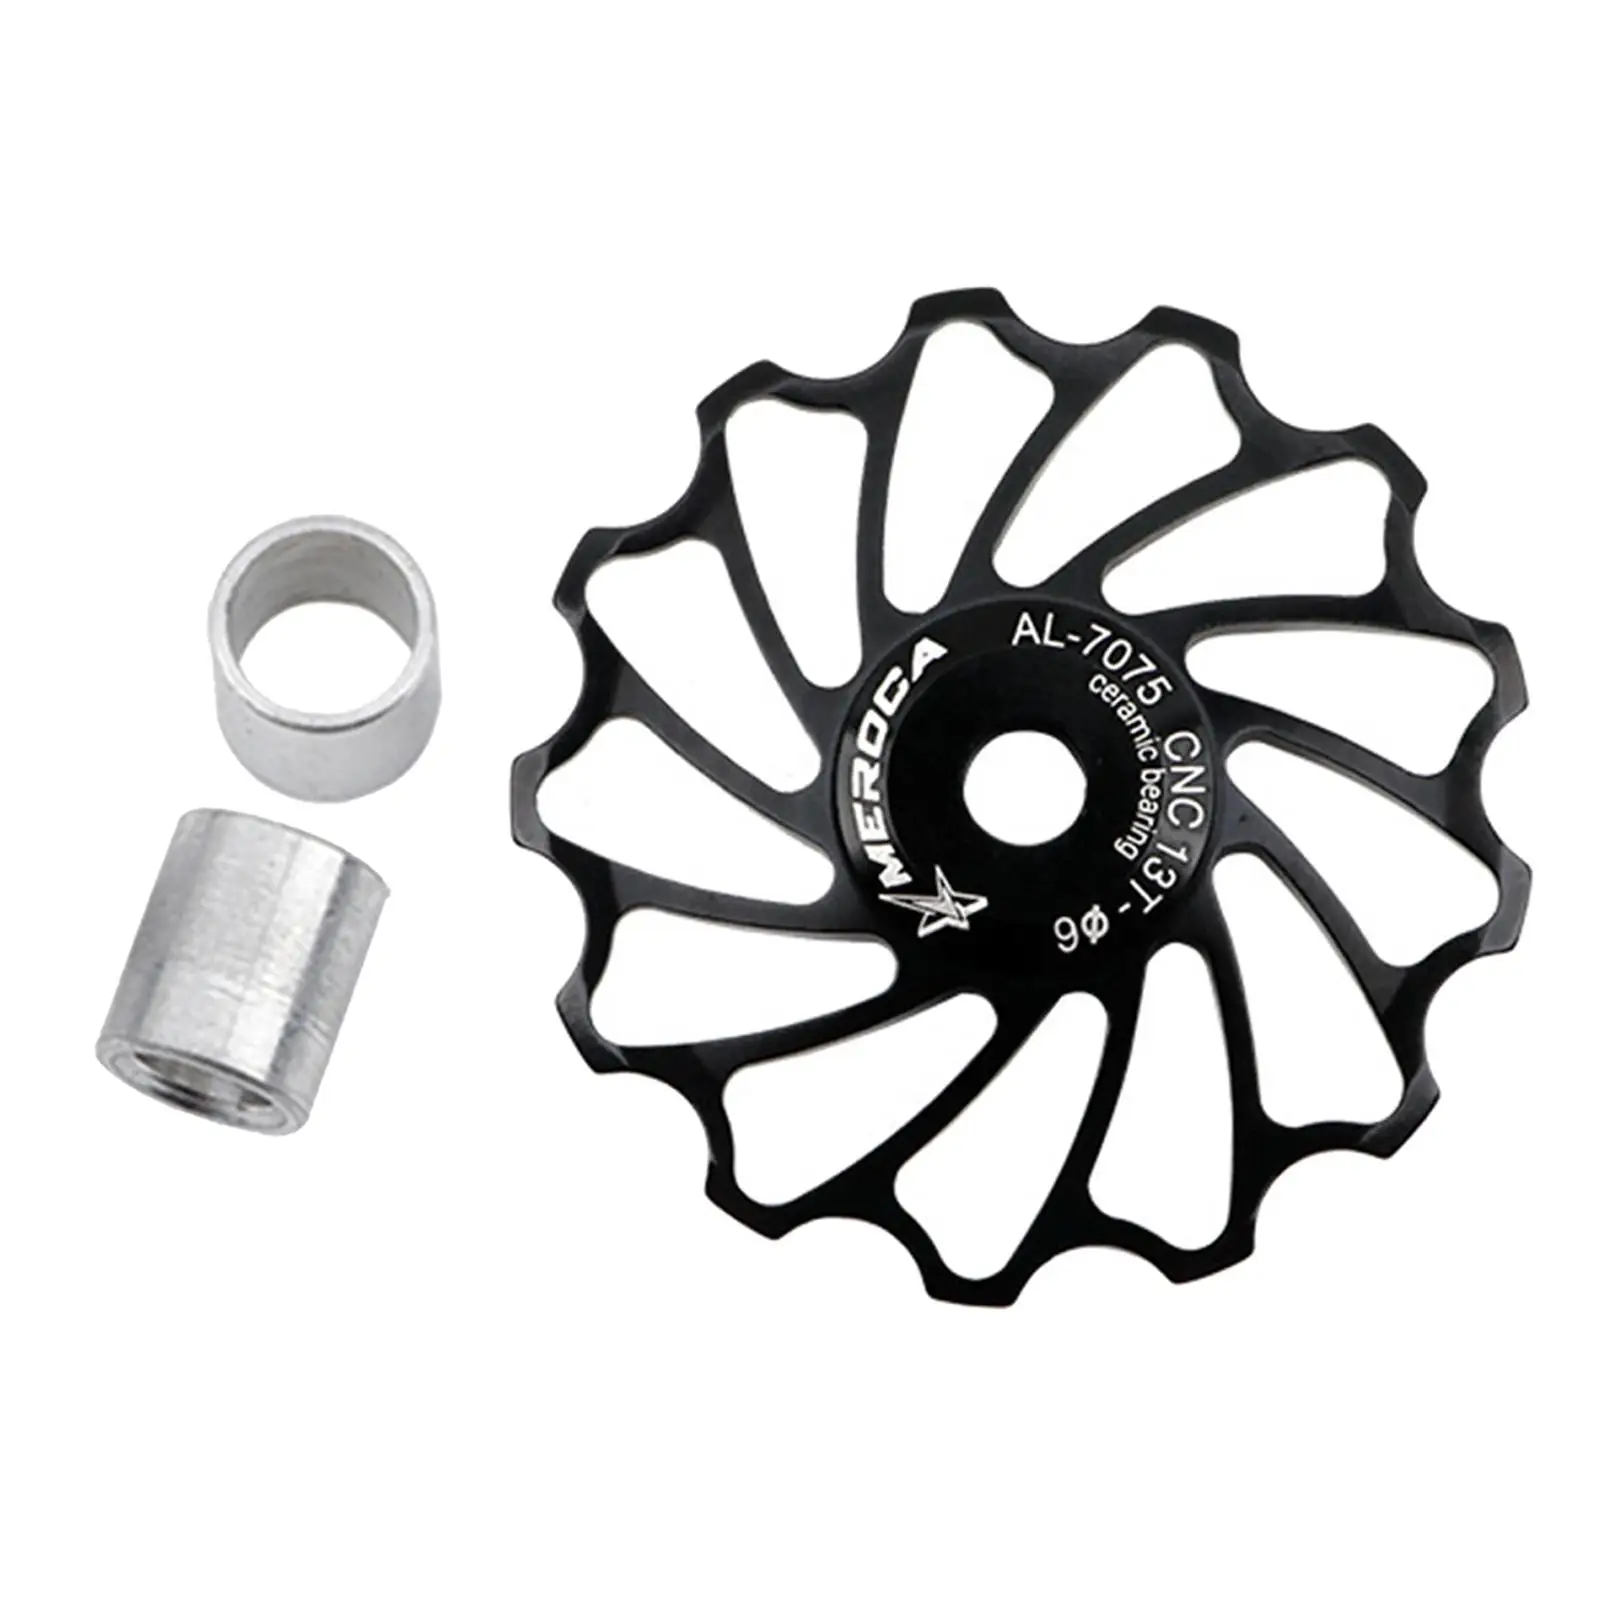 11/13T Bearing Jockey Wheel Wide Range of Use Durable Ceramic for Bicycle